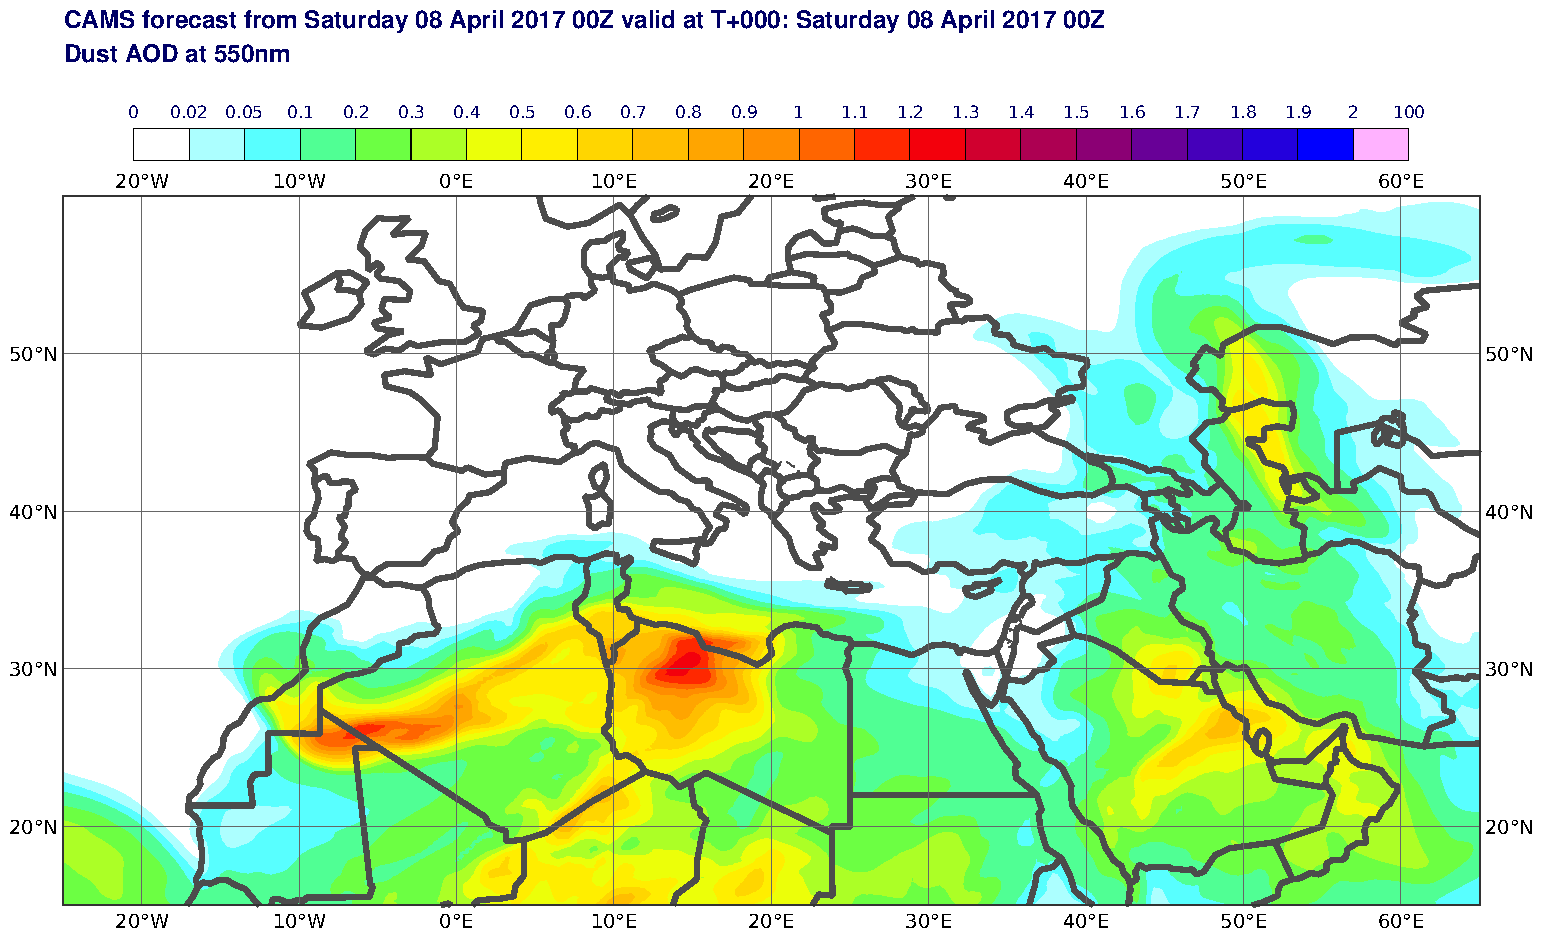 Dust AOD at 550nm valid at T0 - 2017-04-08 00:00